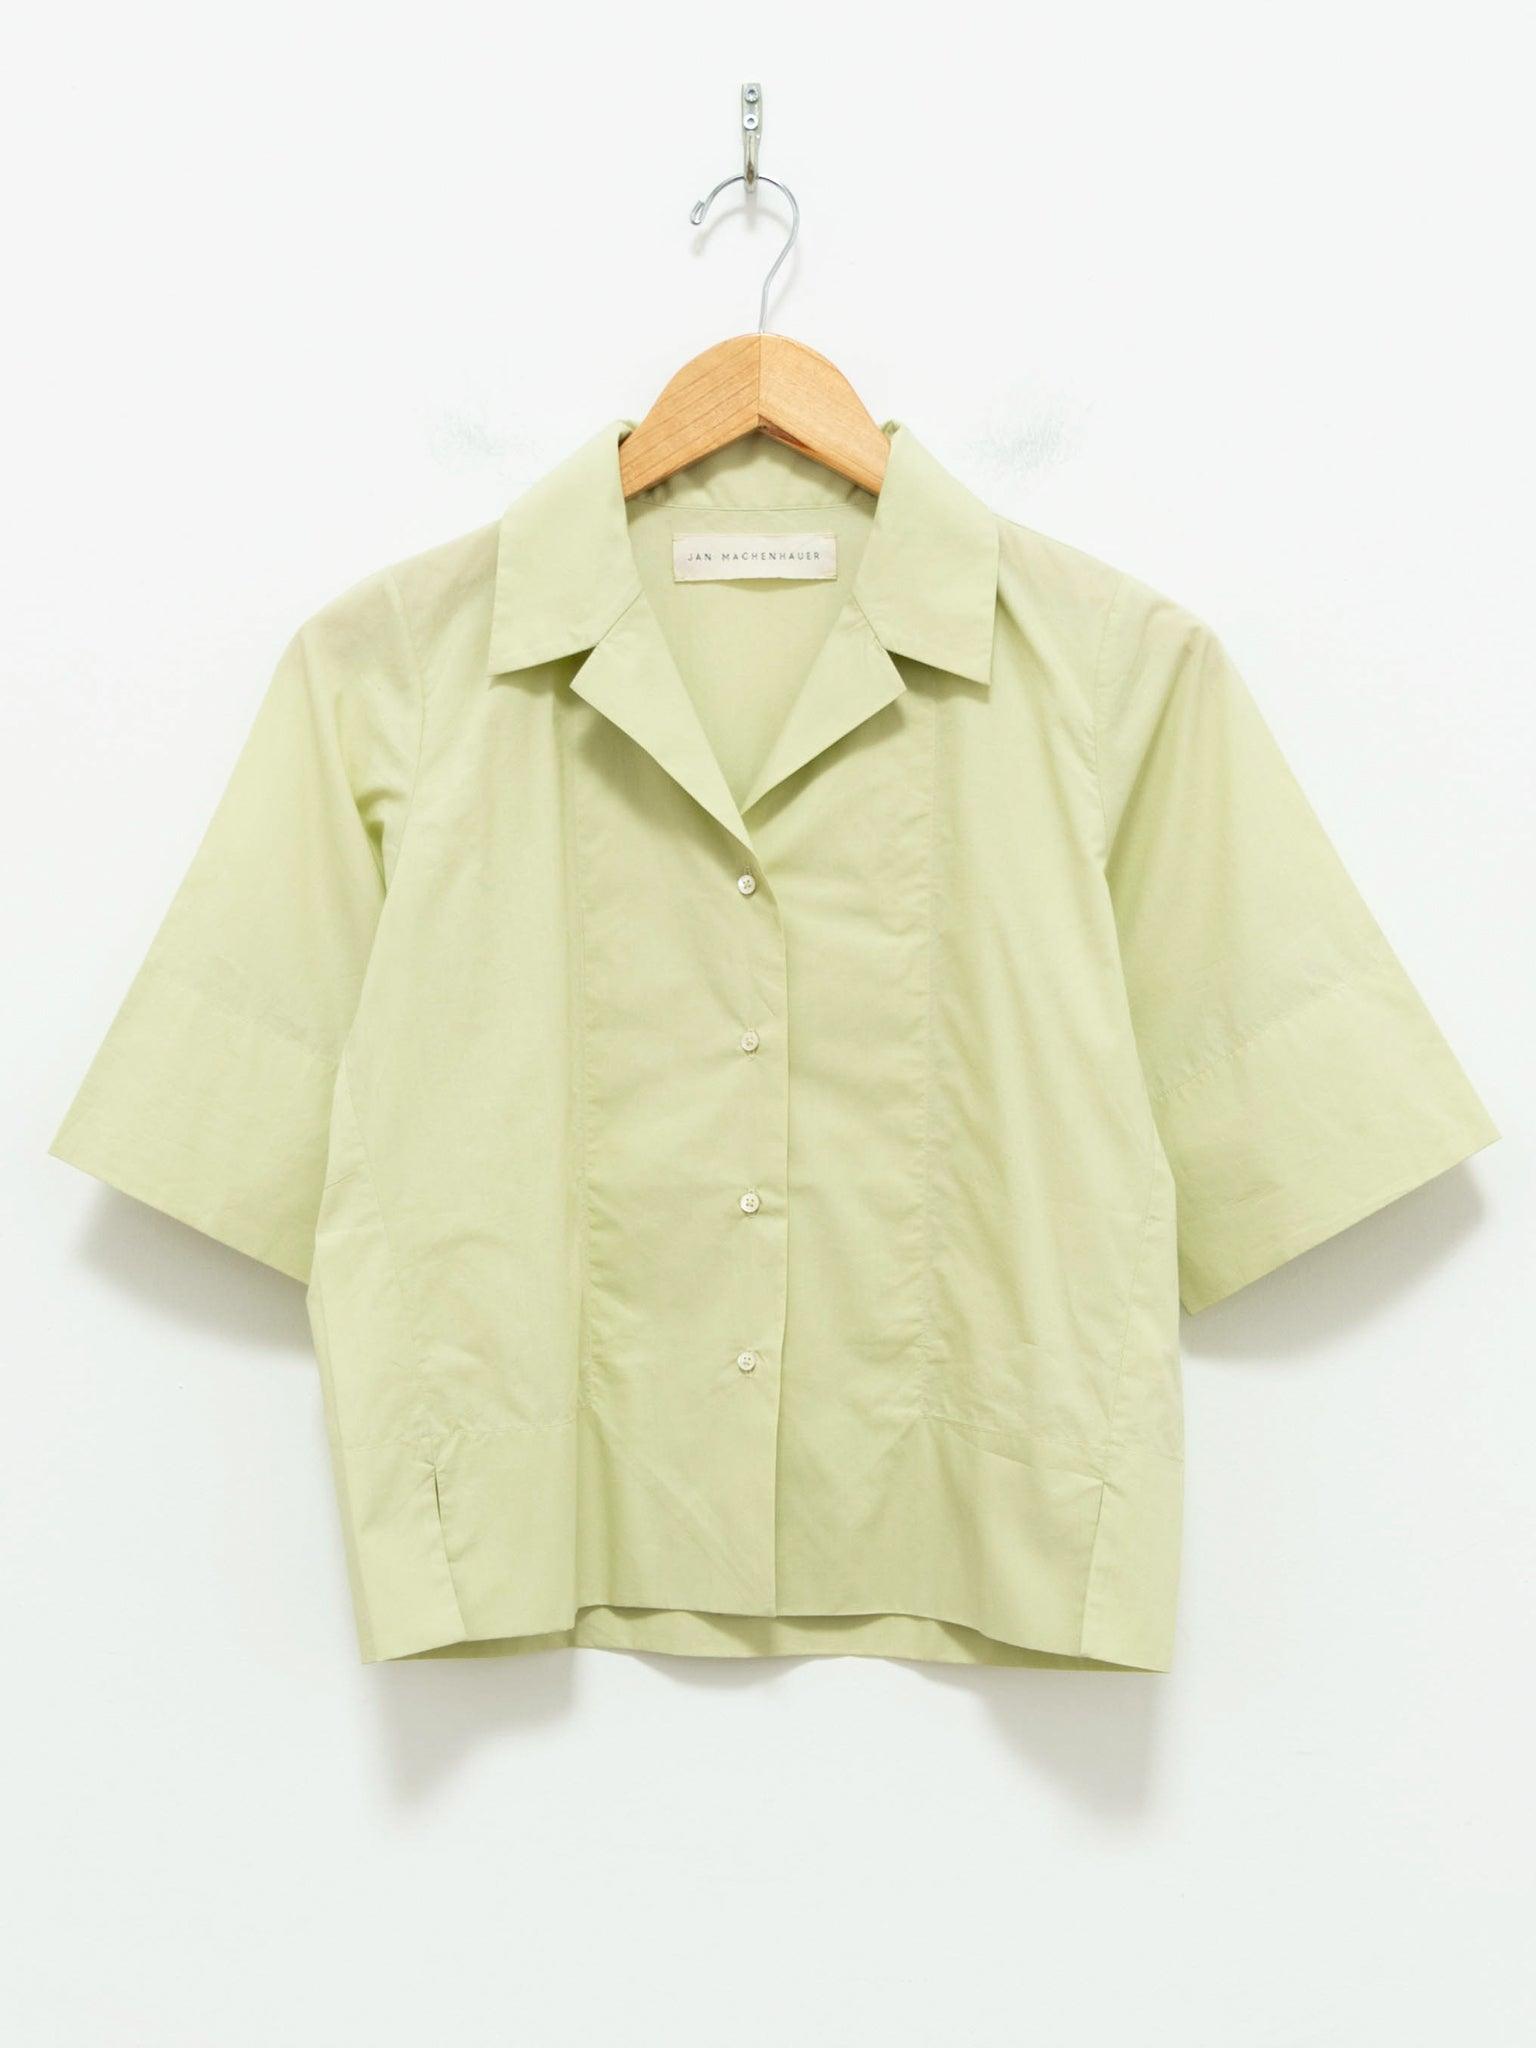 Namu Shop - Jan Machenhauer Ida Shirt - Spring Leaf Cotton Poplin